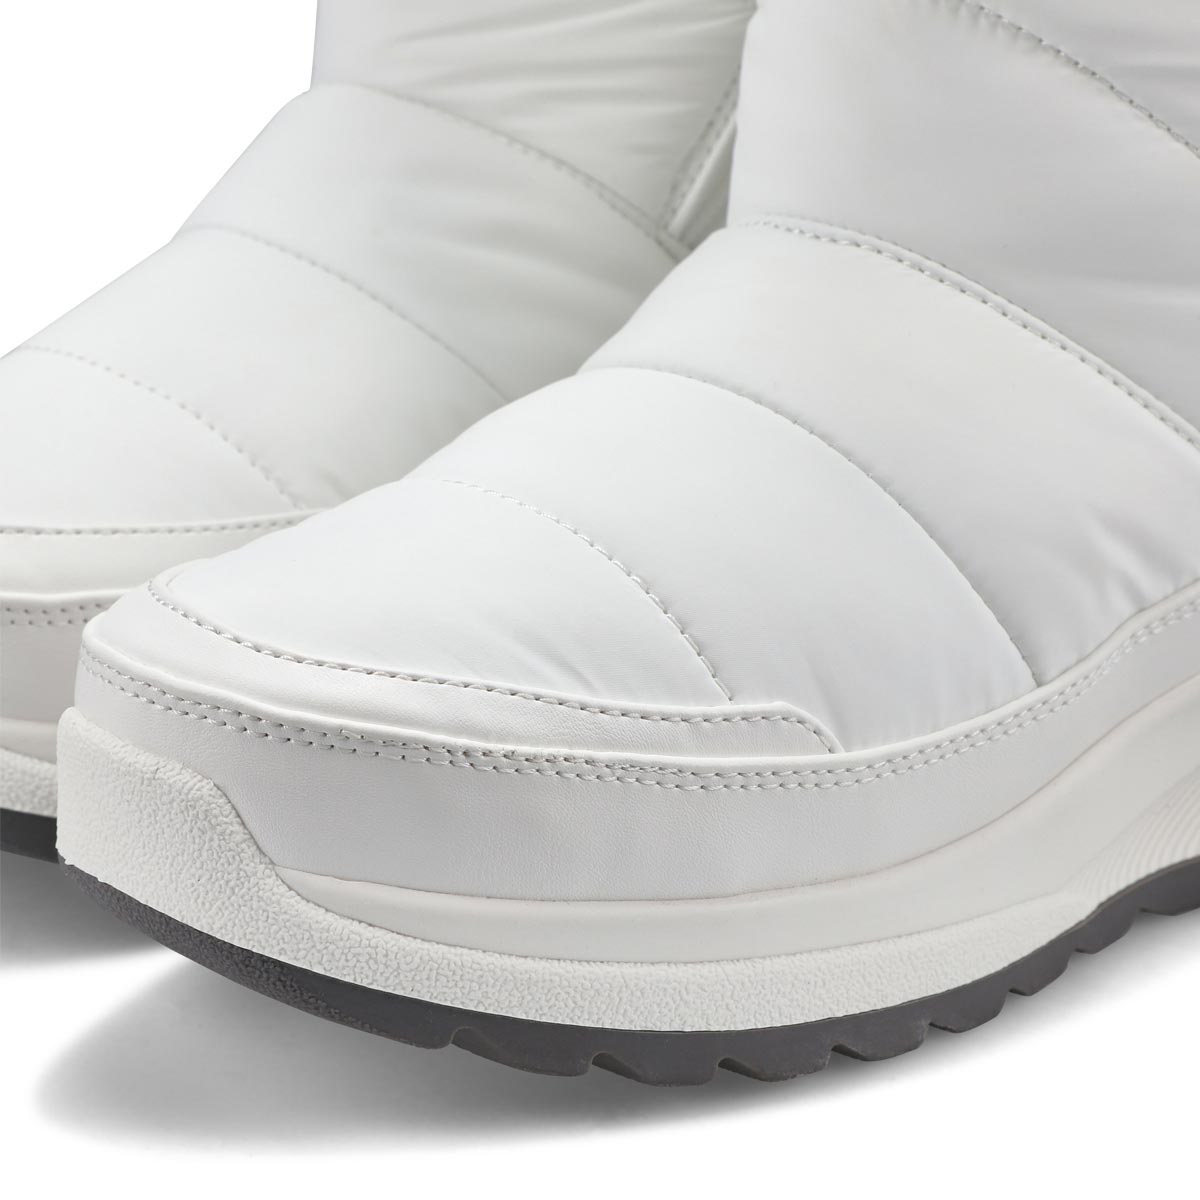 Women's Switch Waterproof Winter Boot - White